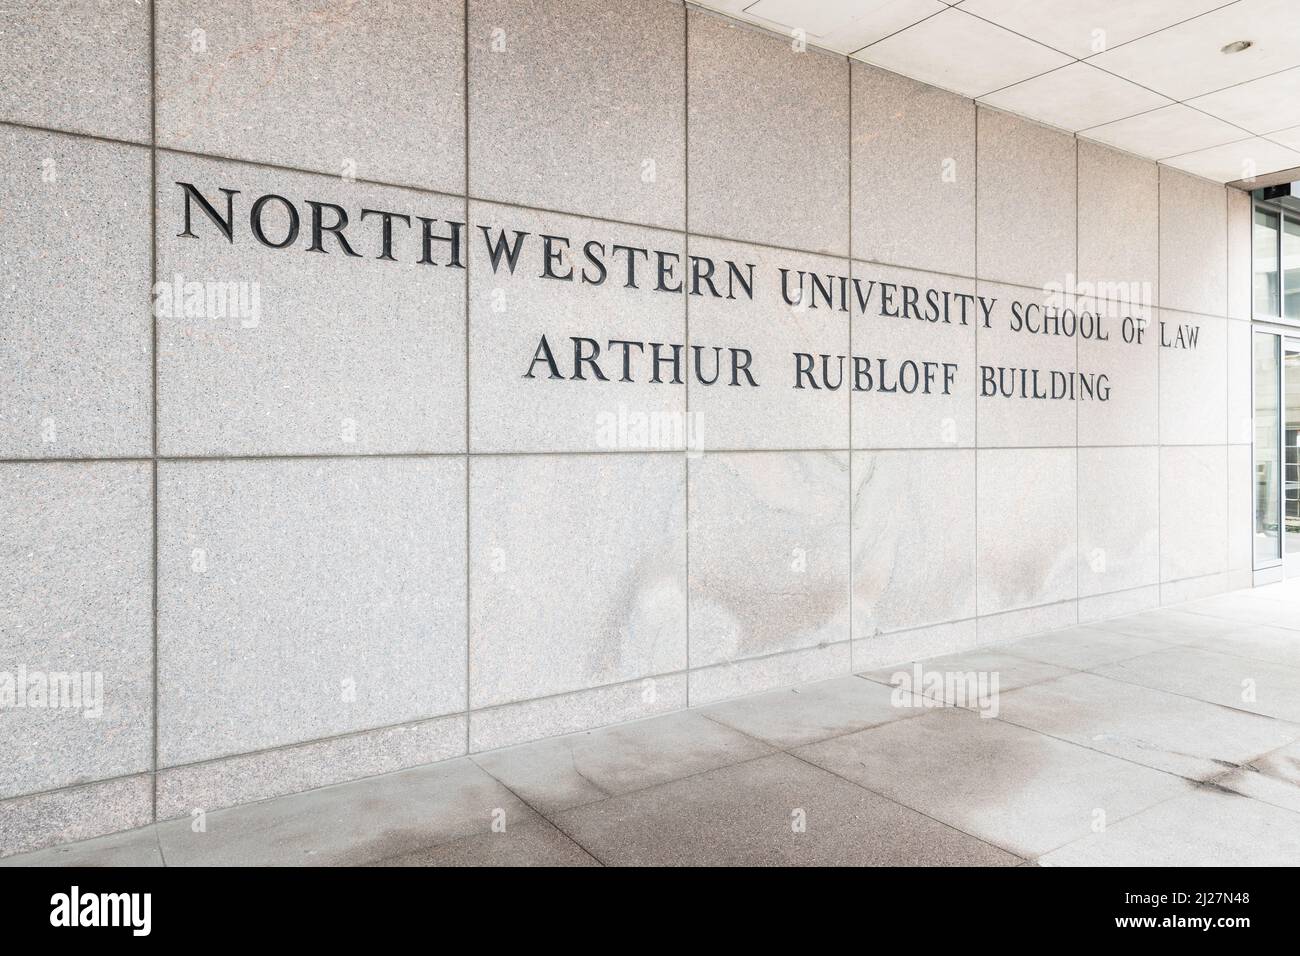 The Arthur Rubloff building at Northwestern University School of Law. Stock Photo